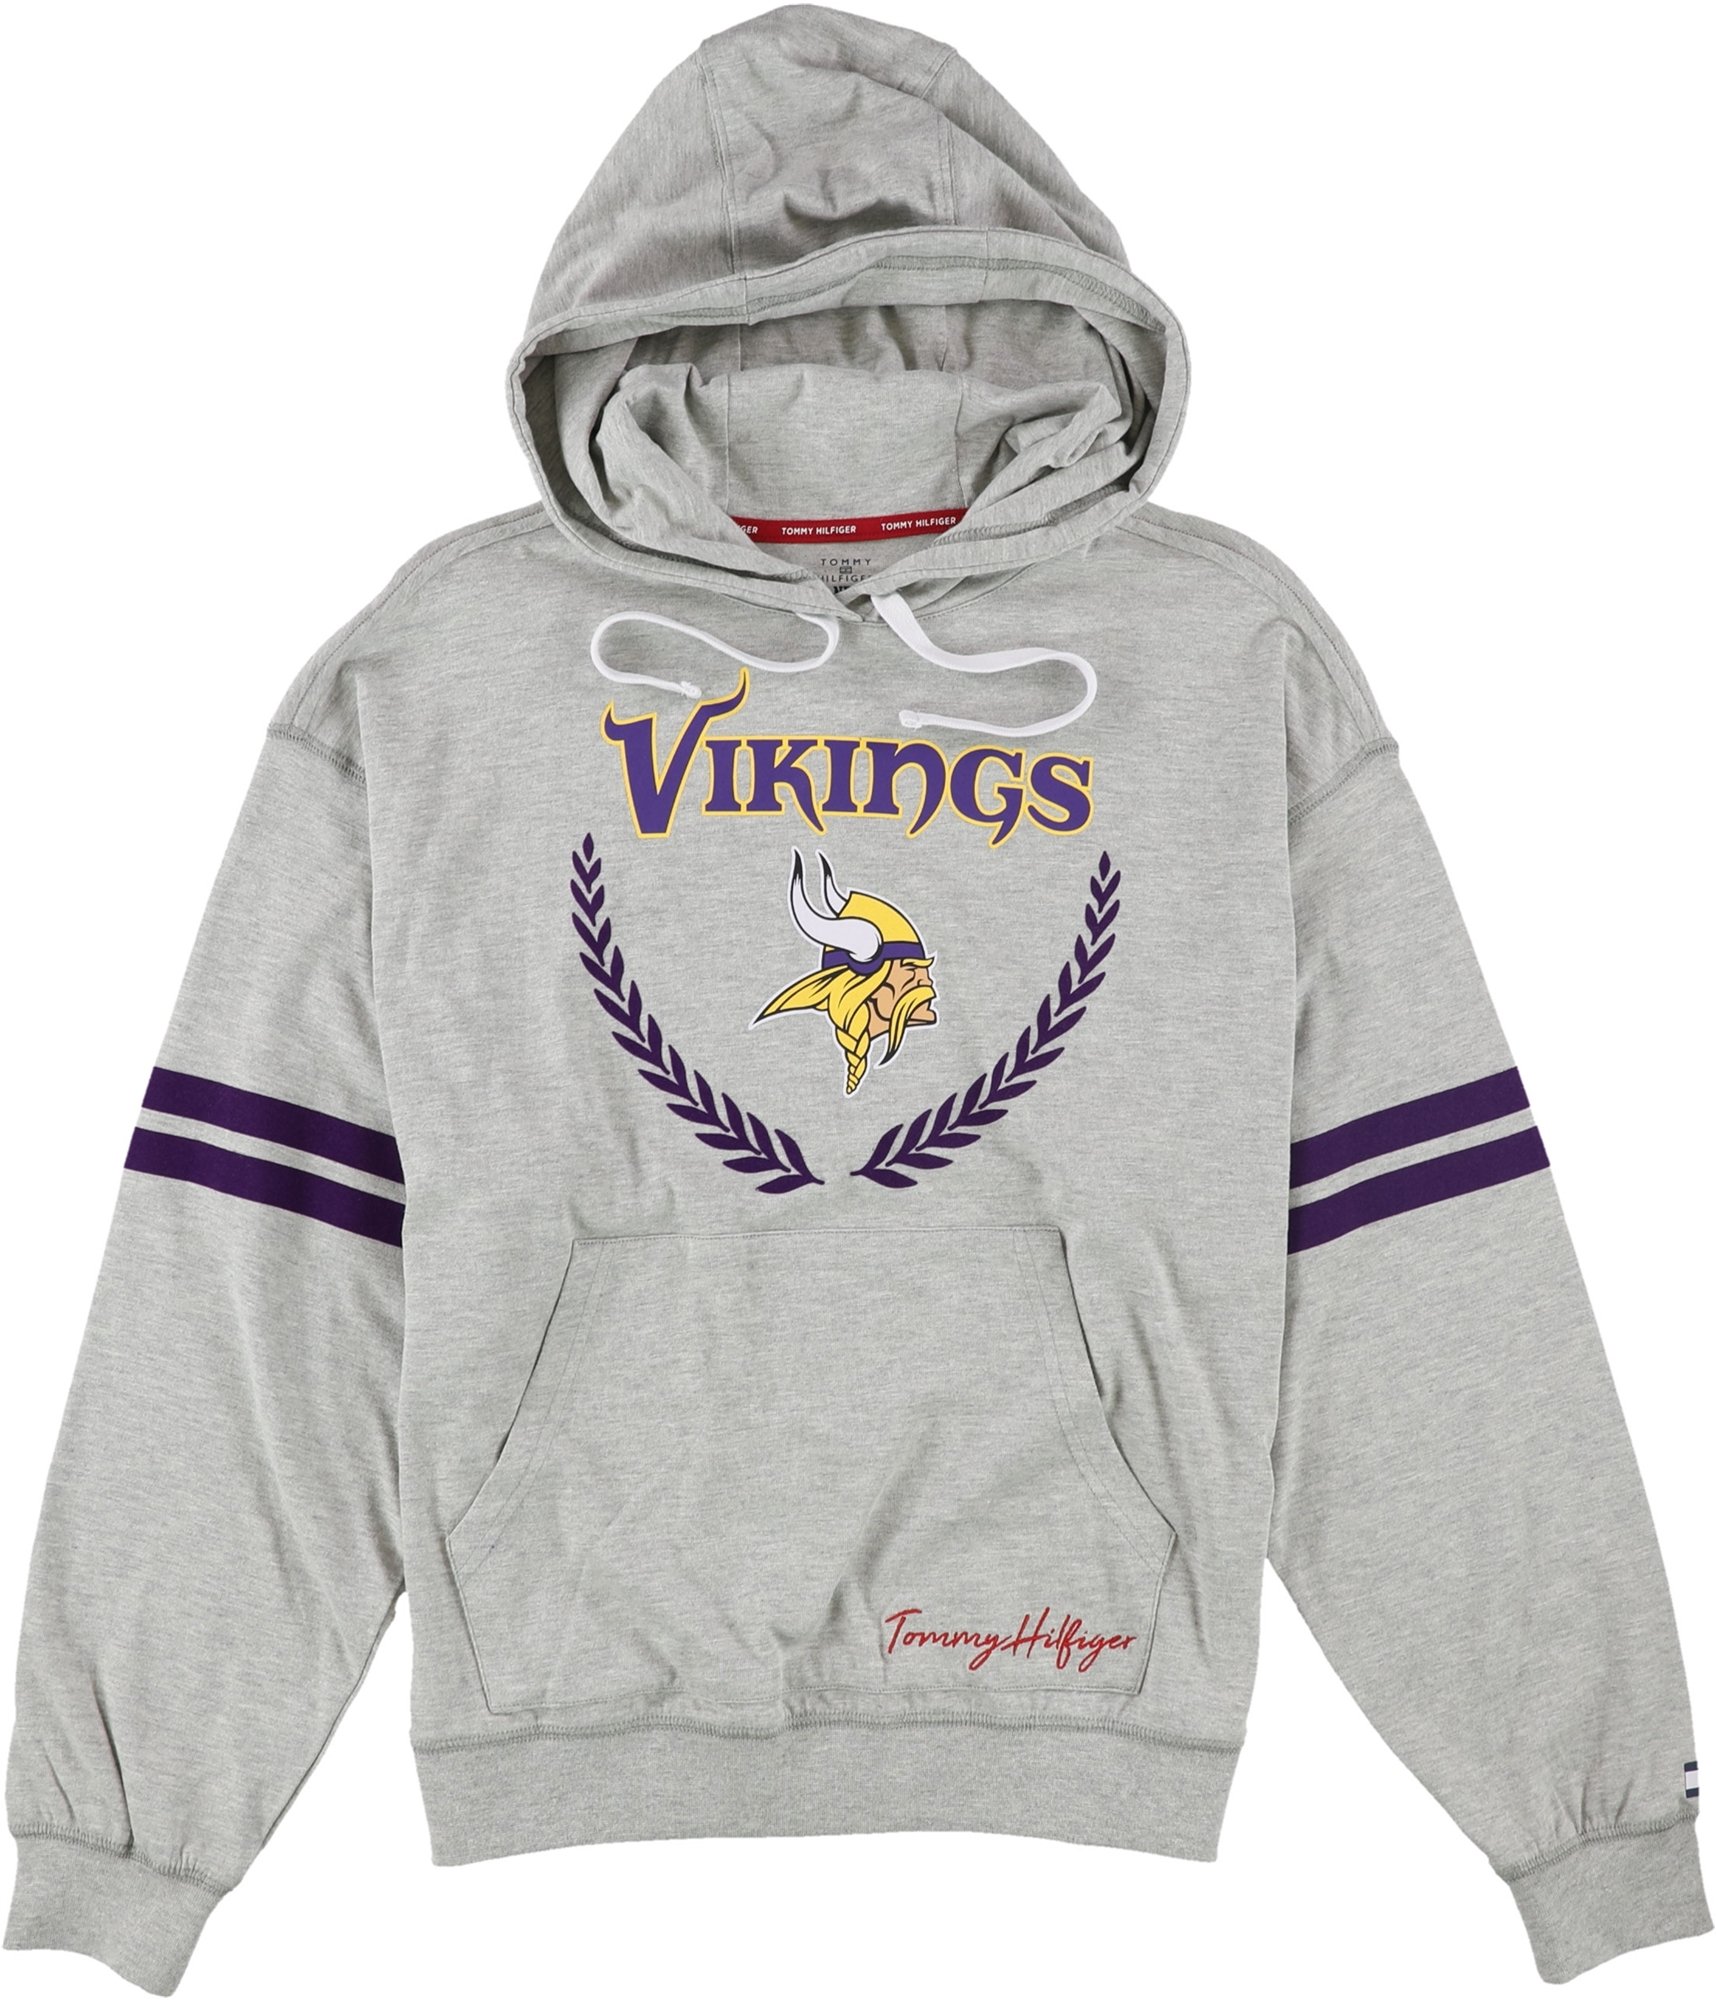 Tommy Hilfiger Womens Minnesota Vikings Hoodie Sweatshirt, Grey, Small